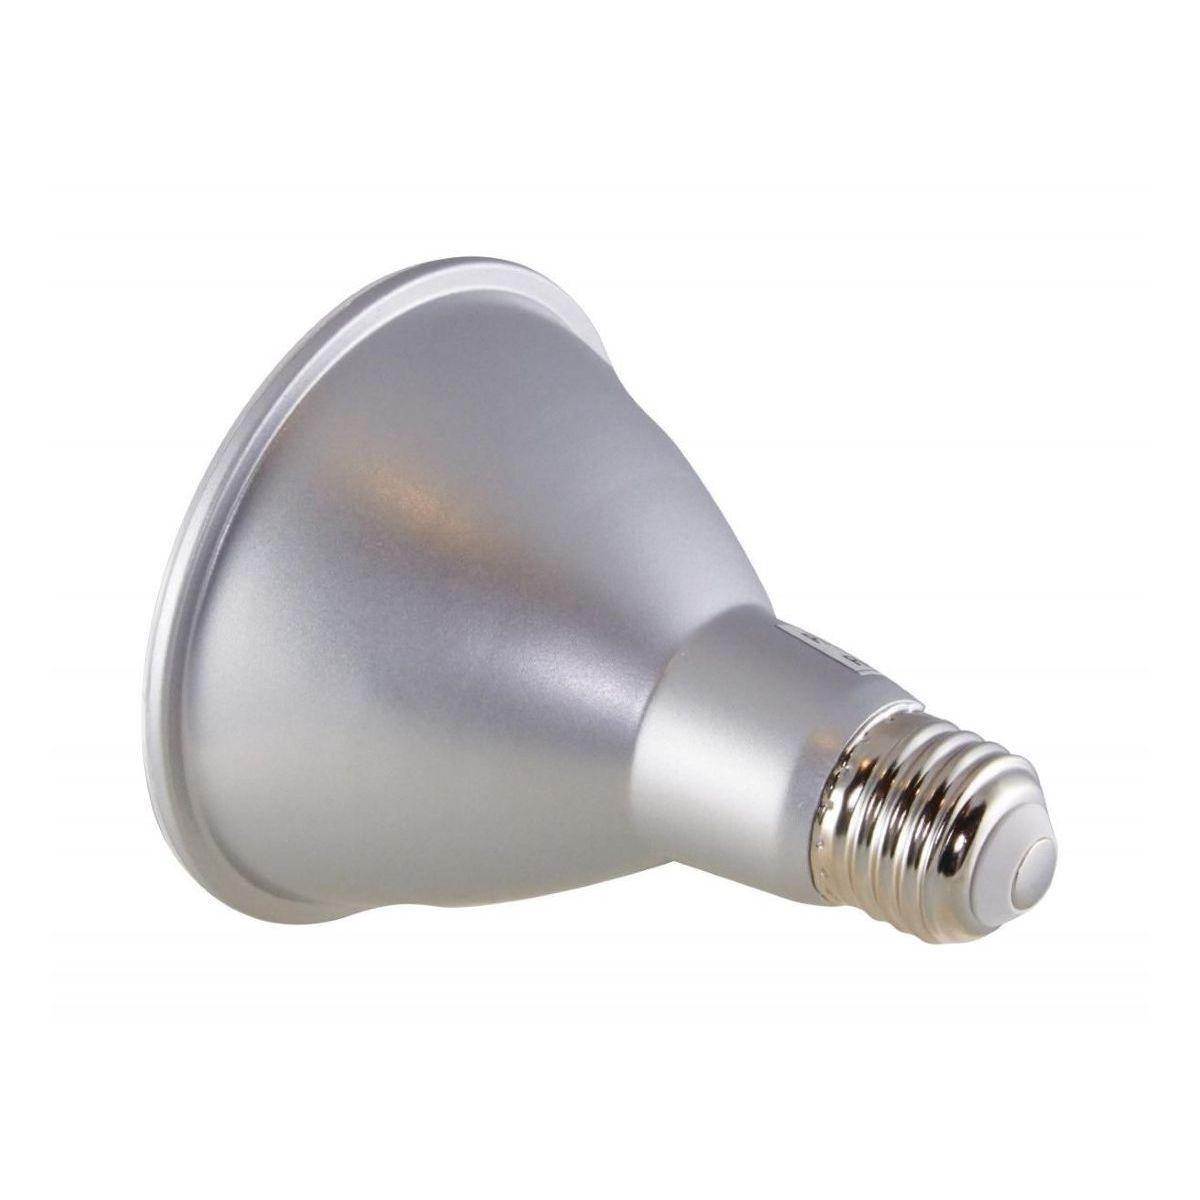 PAR30 Long Neck Reflector LED Bulb, 13 watt, 1000 Lumens, 5000K, E26 Medium Base, 40 Deg. Flood